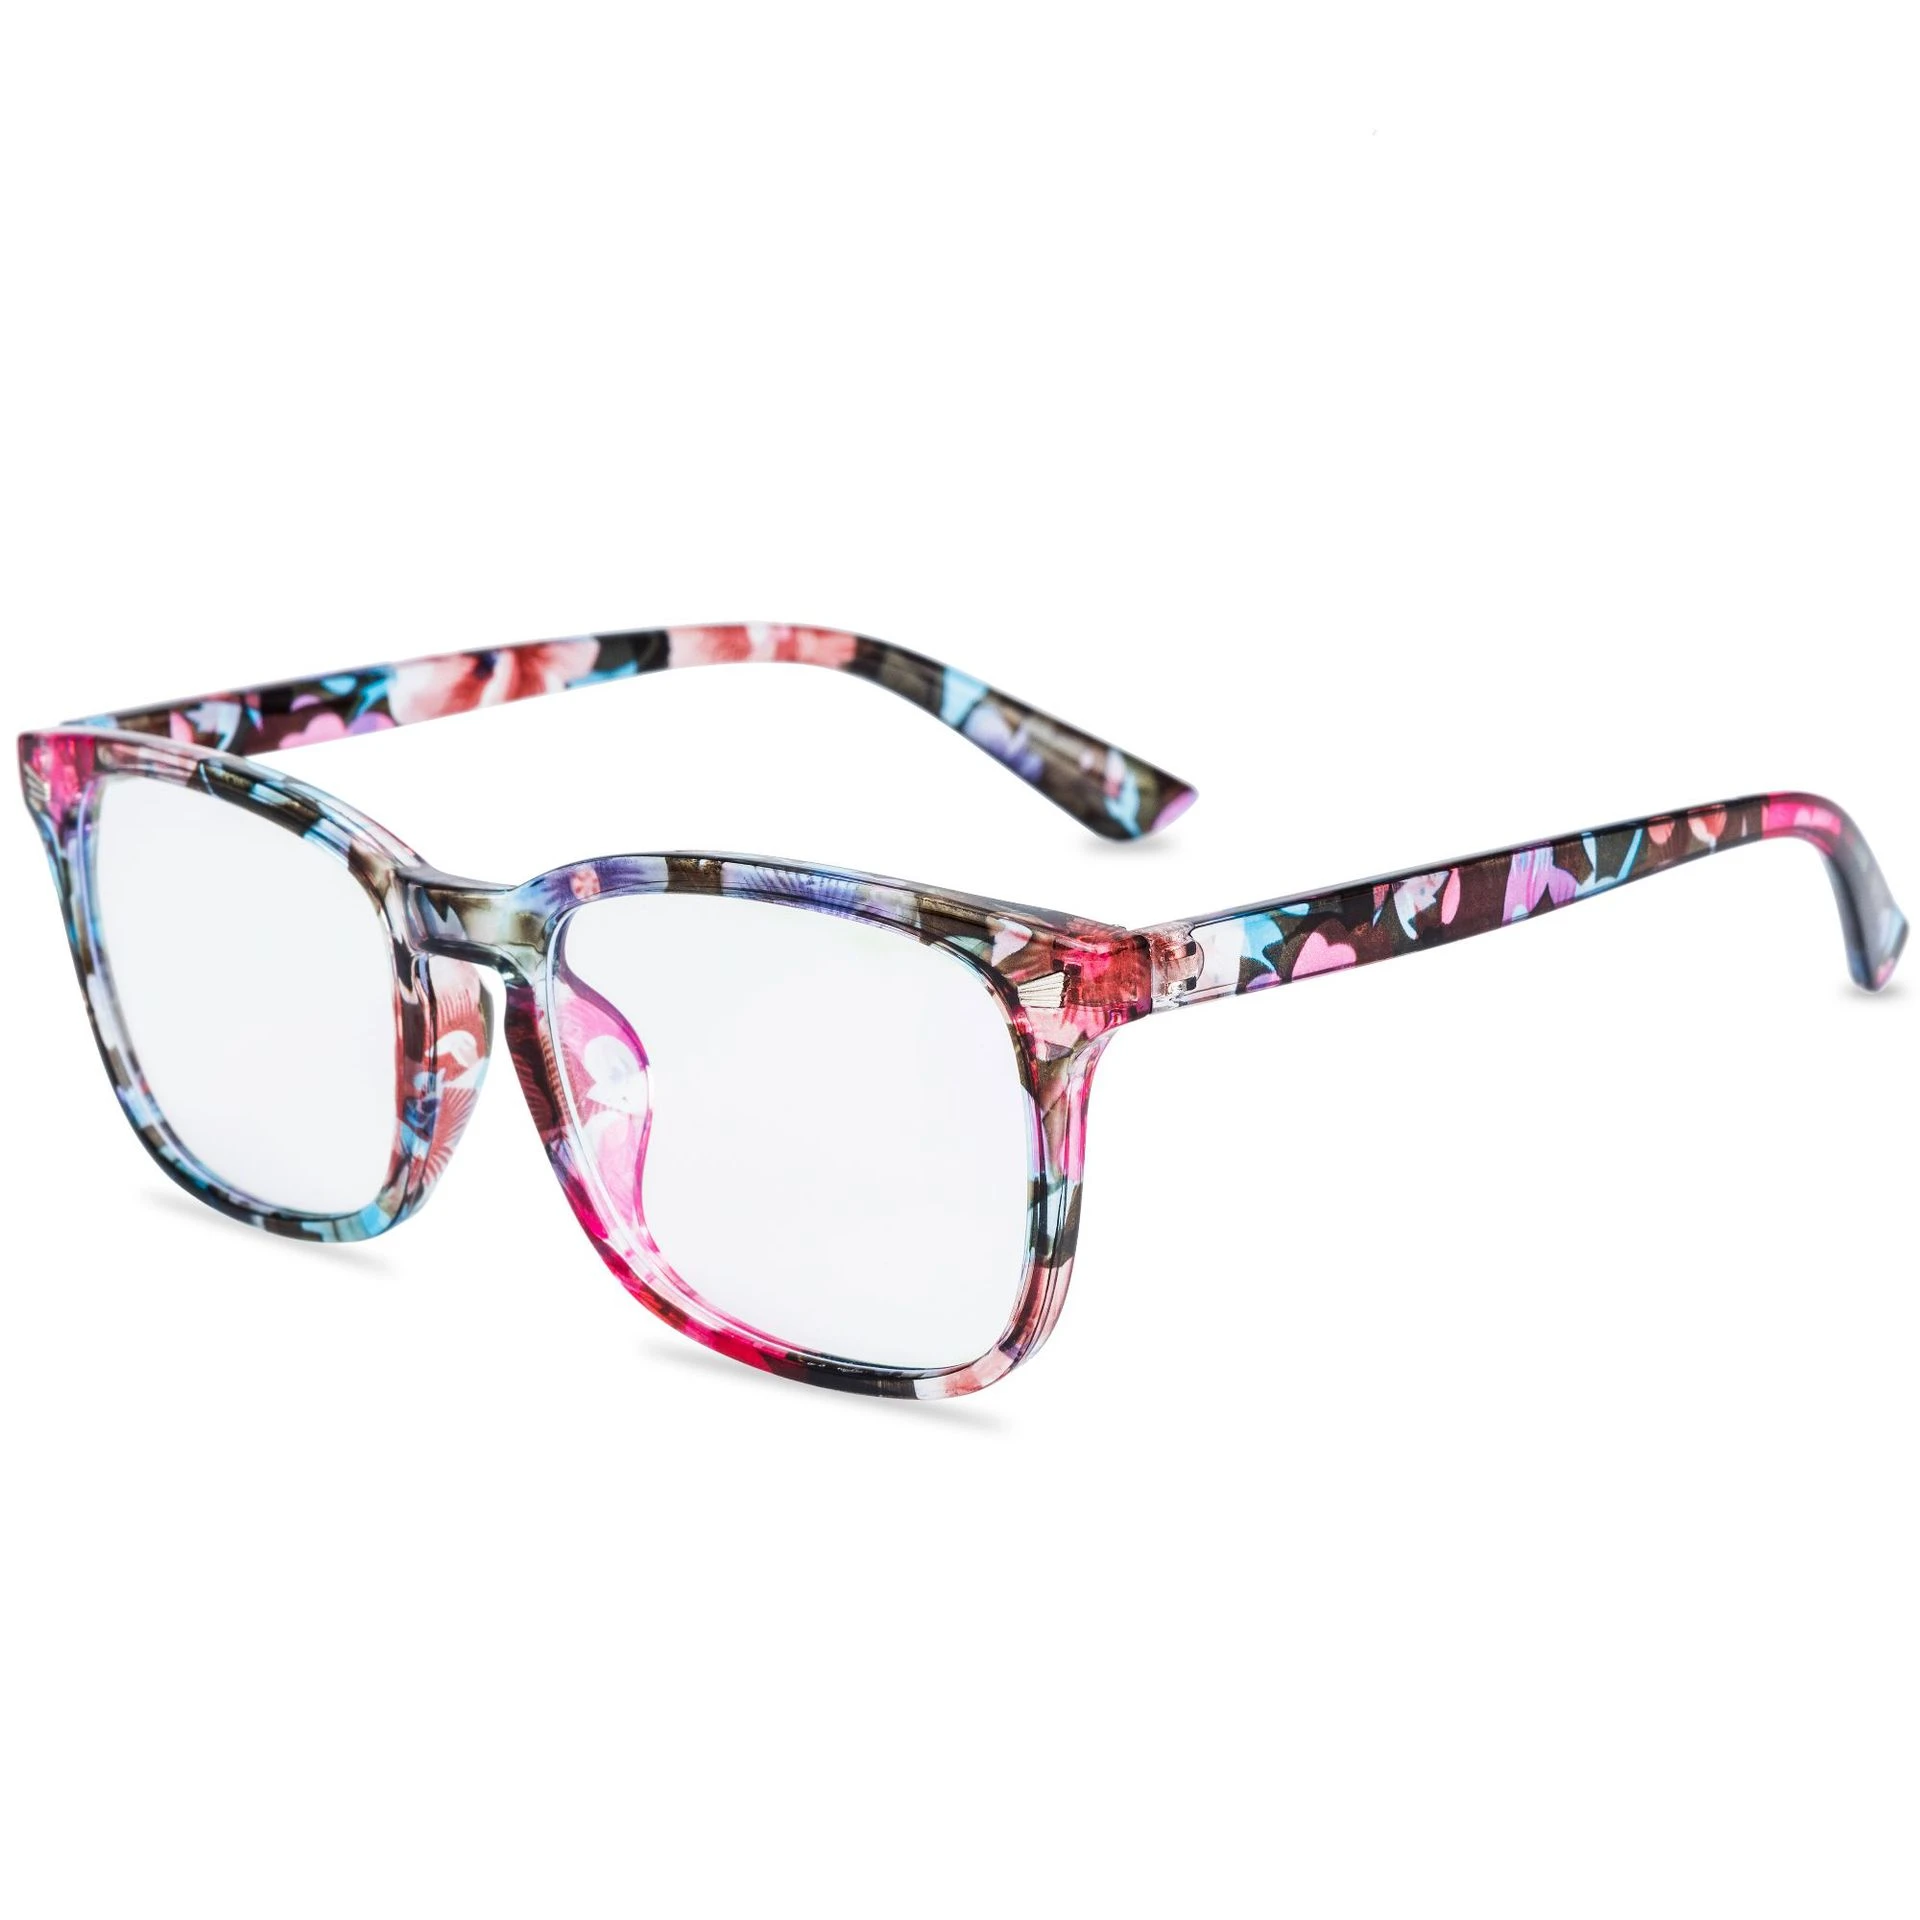 Factory direct price optical glasses glasses eyewear new design fram